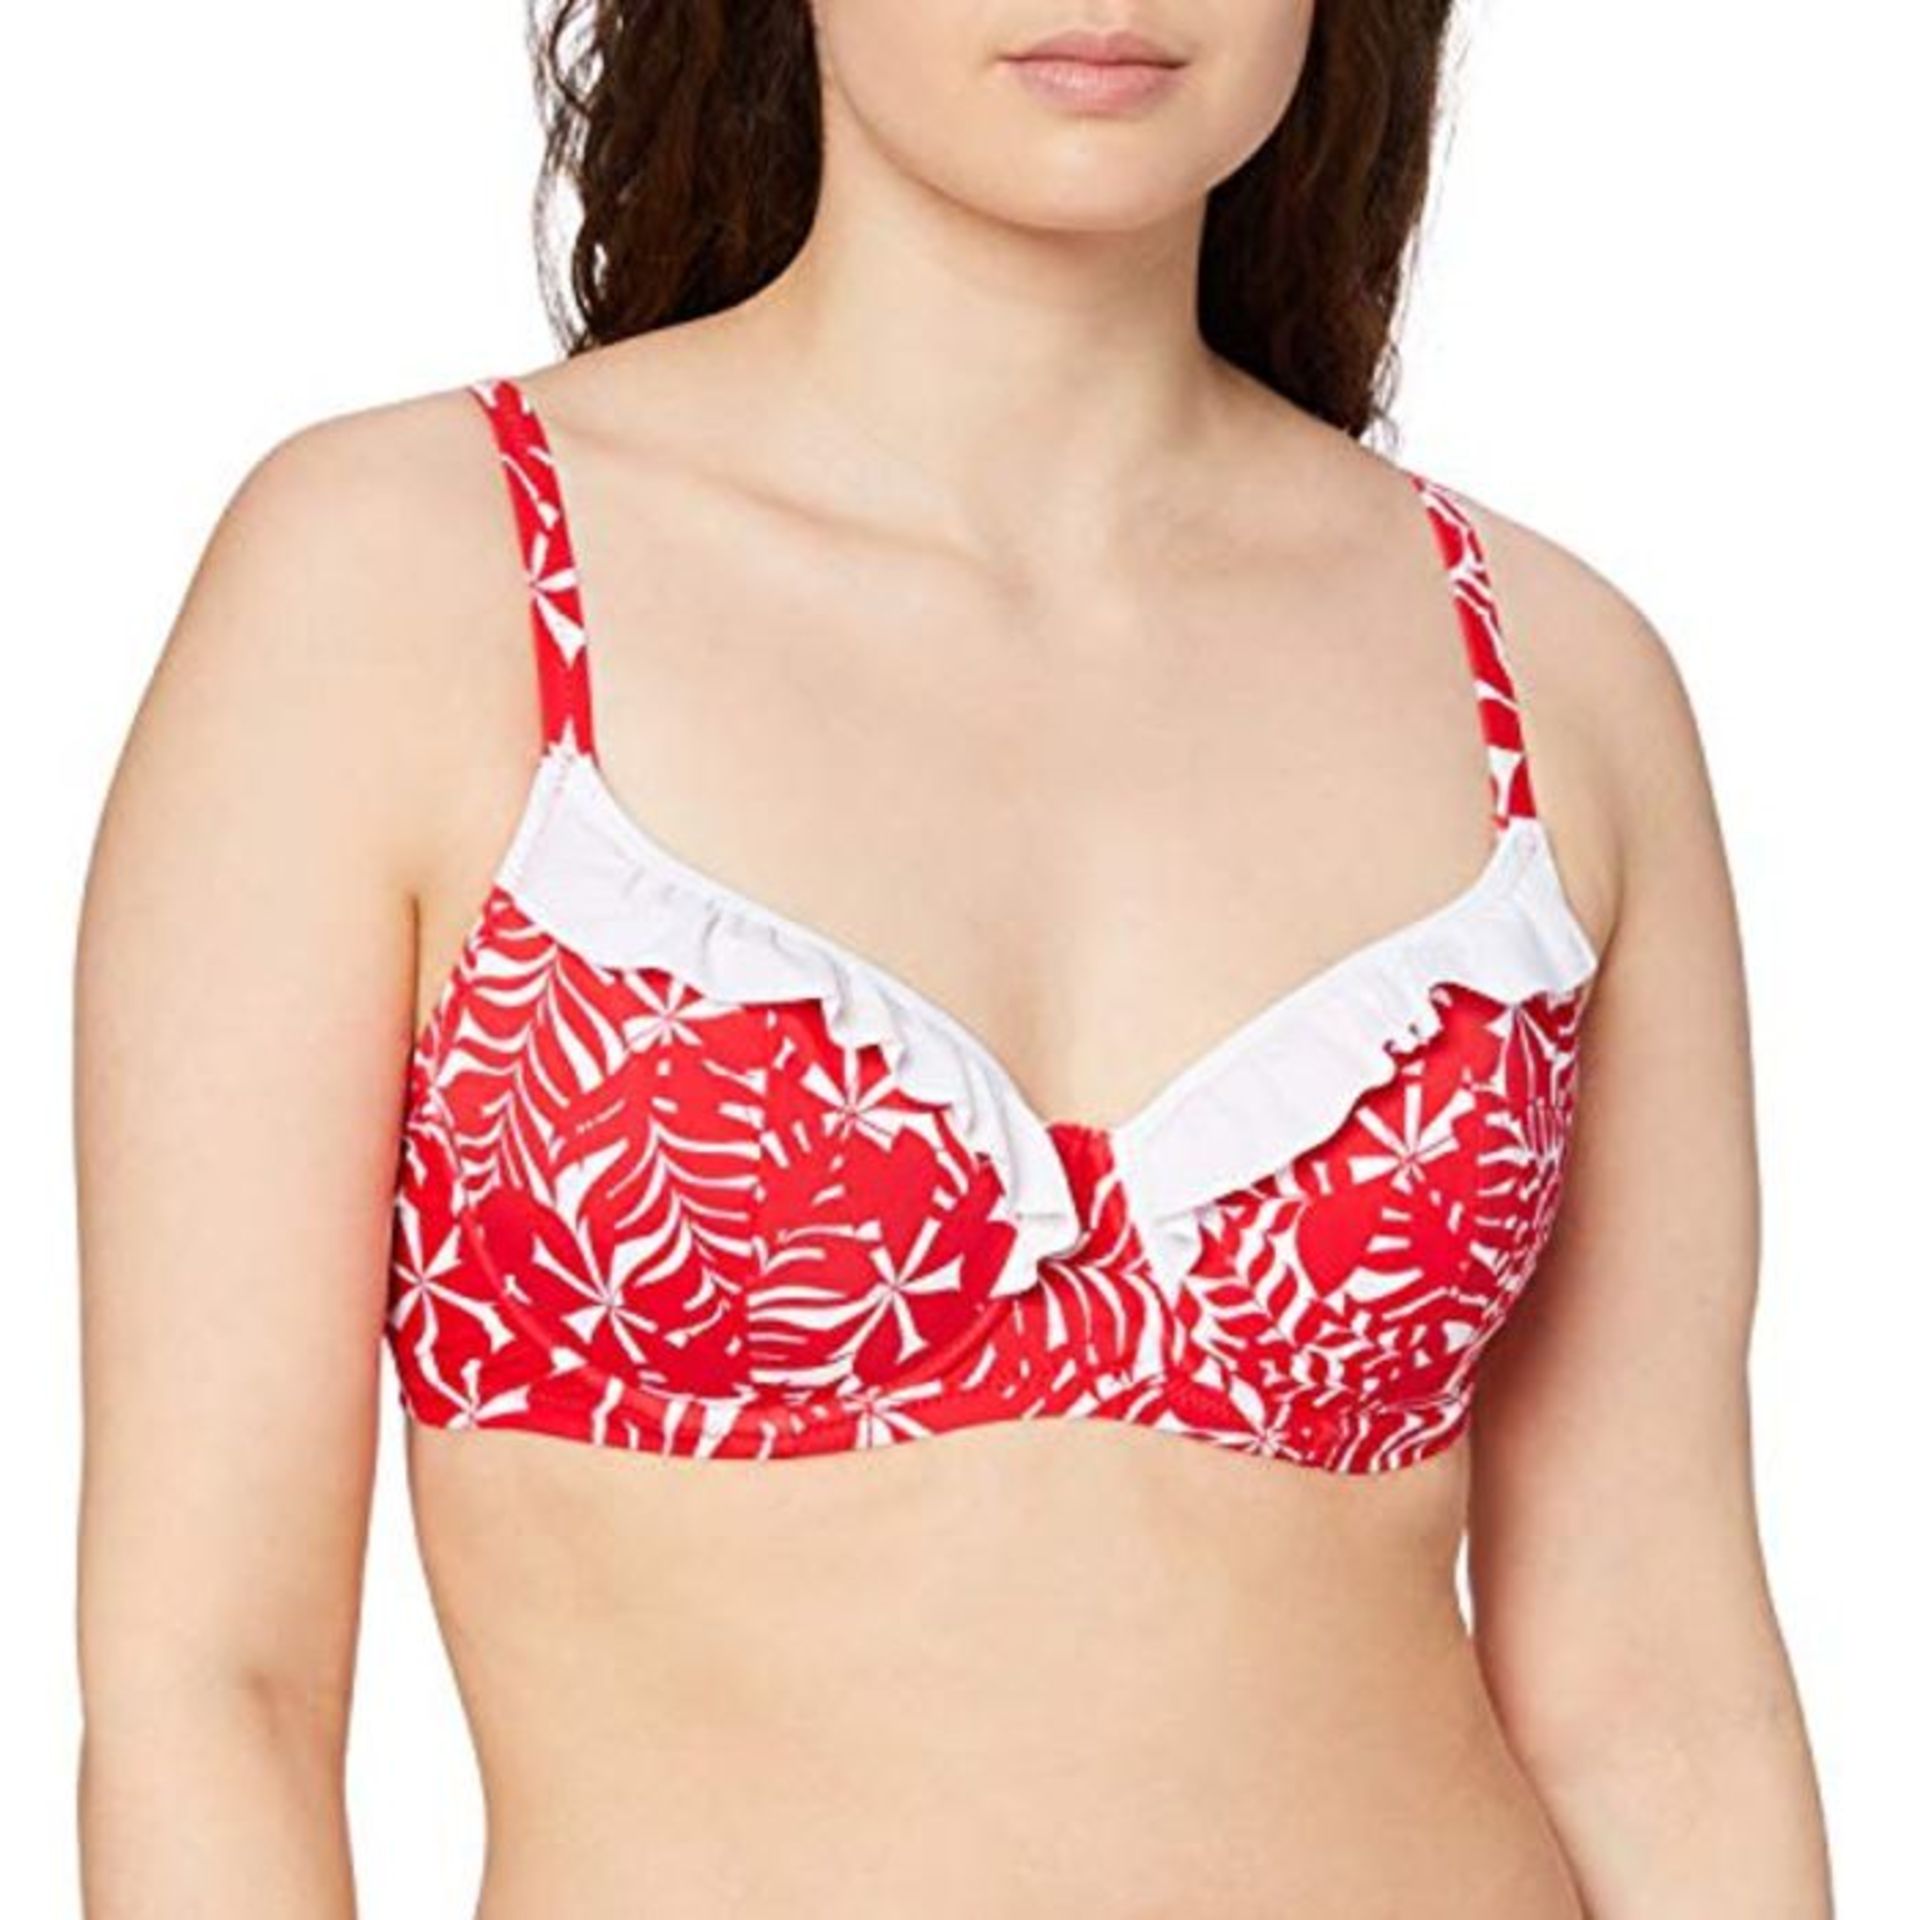 Pour Moi? Women's Fiesta Sweetheart Padded Top Bikini, Red (Red/White), 34D